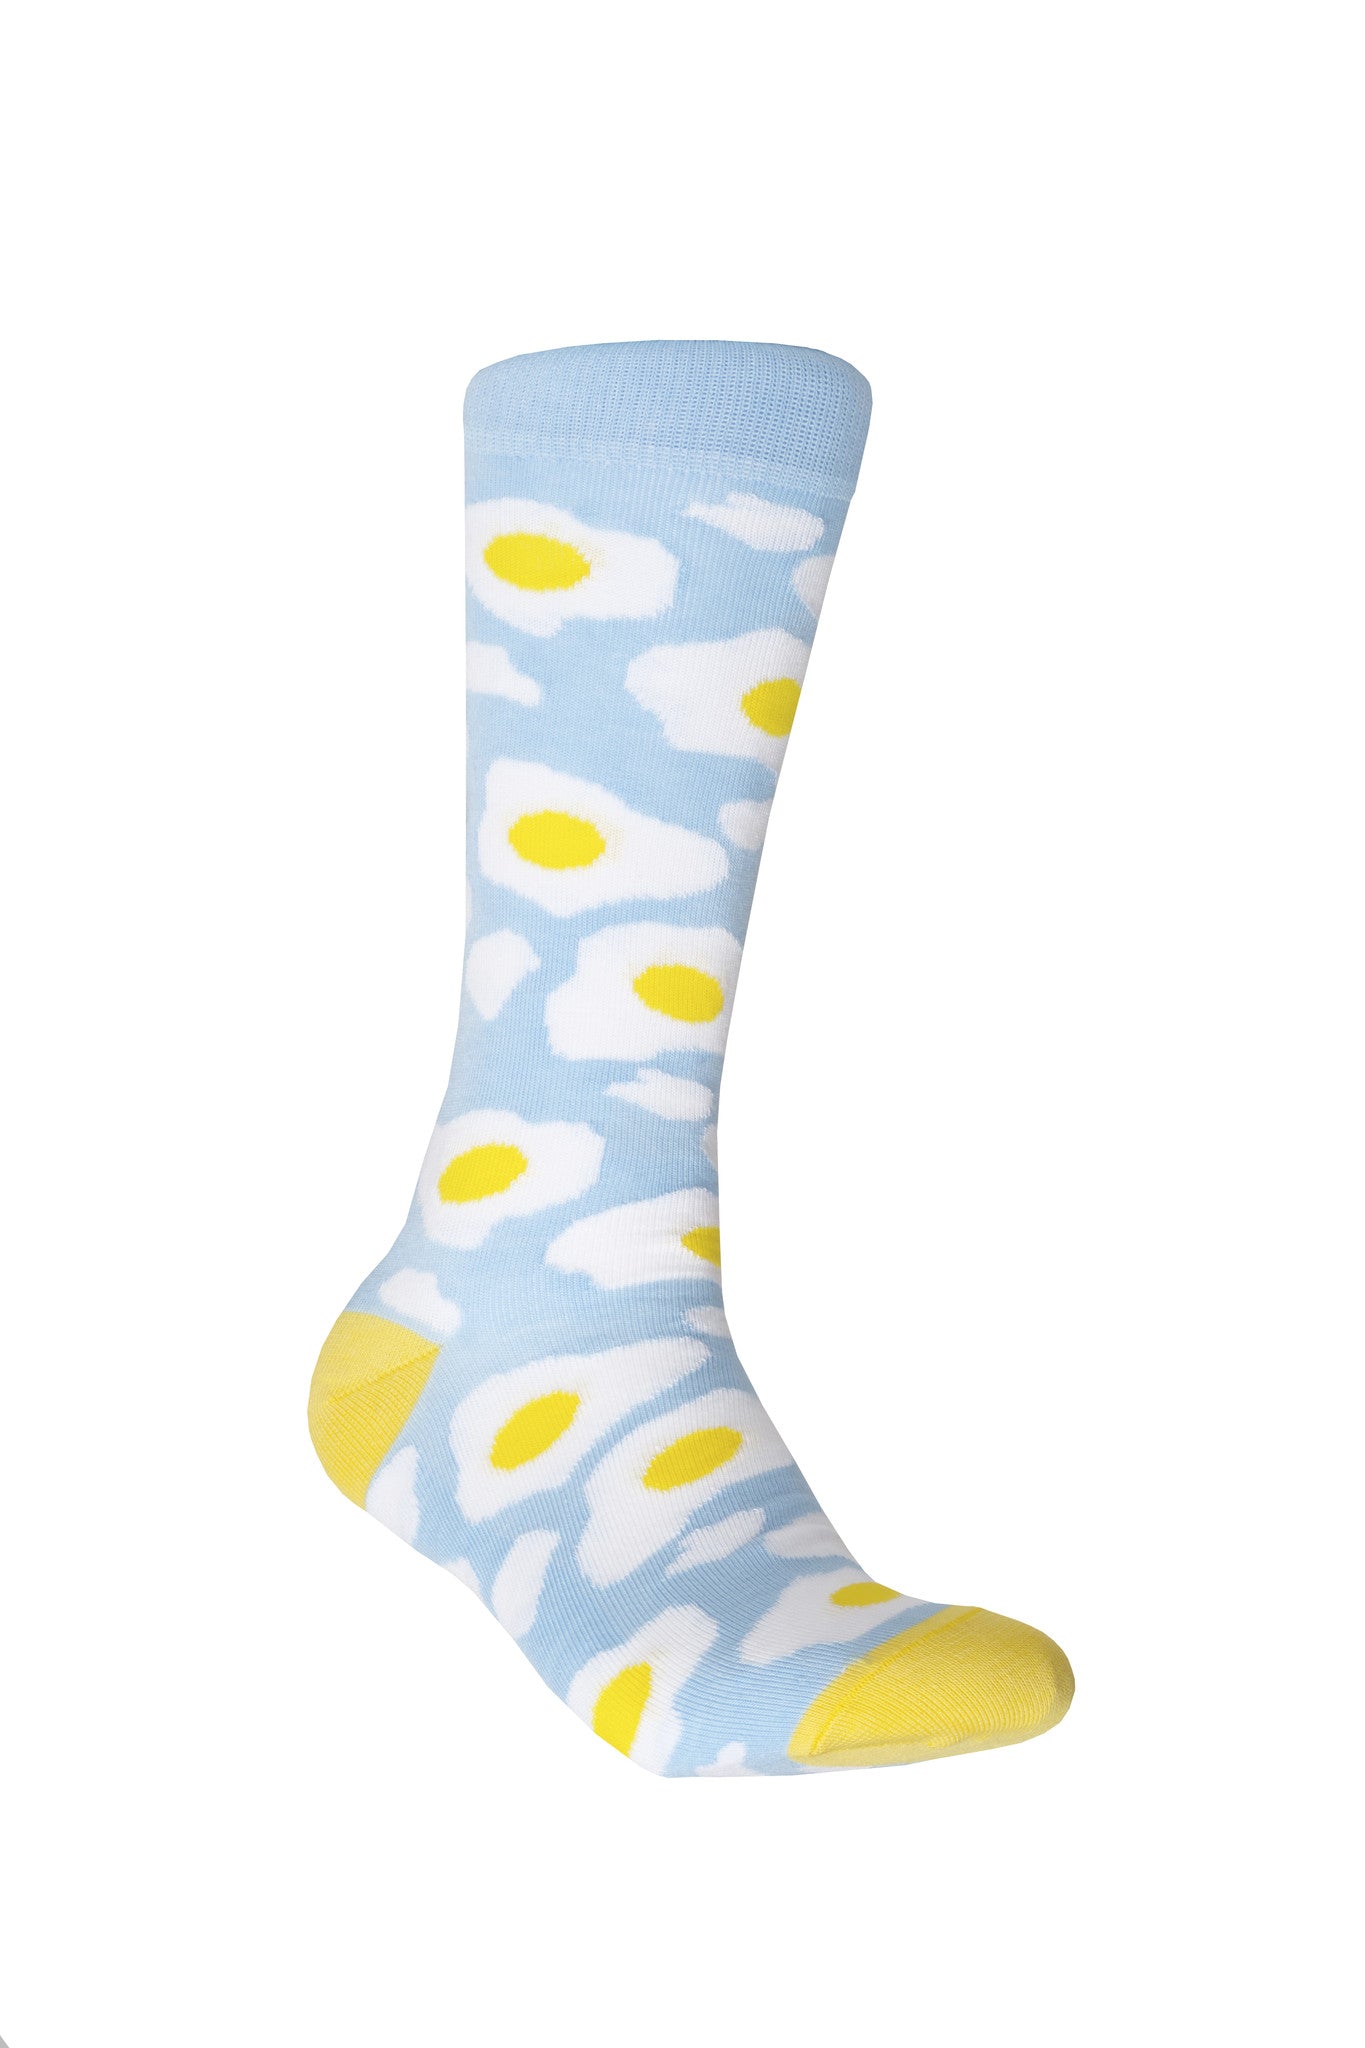 Giraffecool-Giraffe-Cool-Blue-Yellow-White-Clouds-And-Eggs-Brushed-Cotton-Fashion-Socks-Front